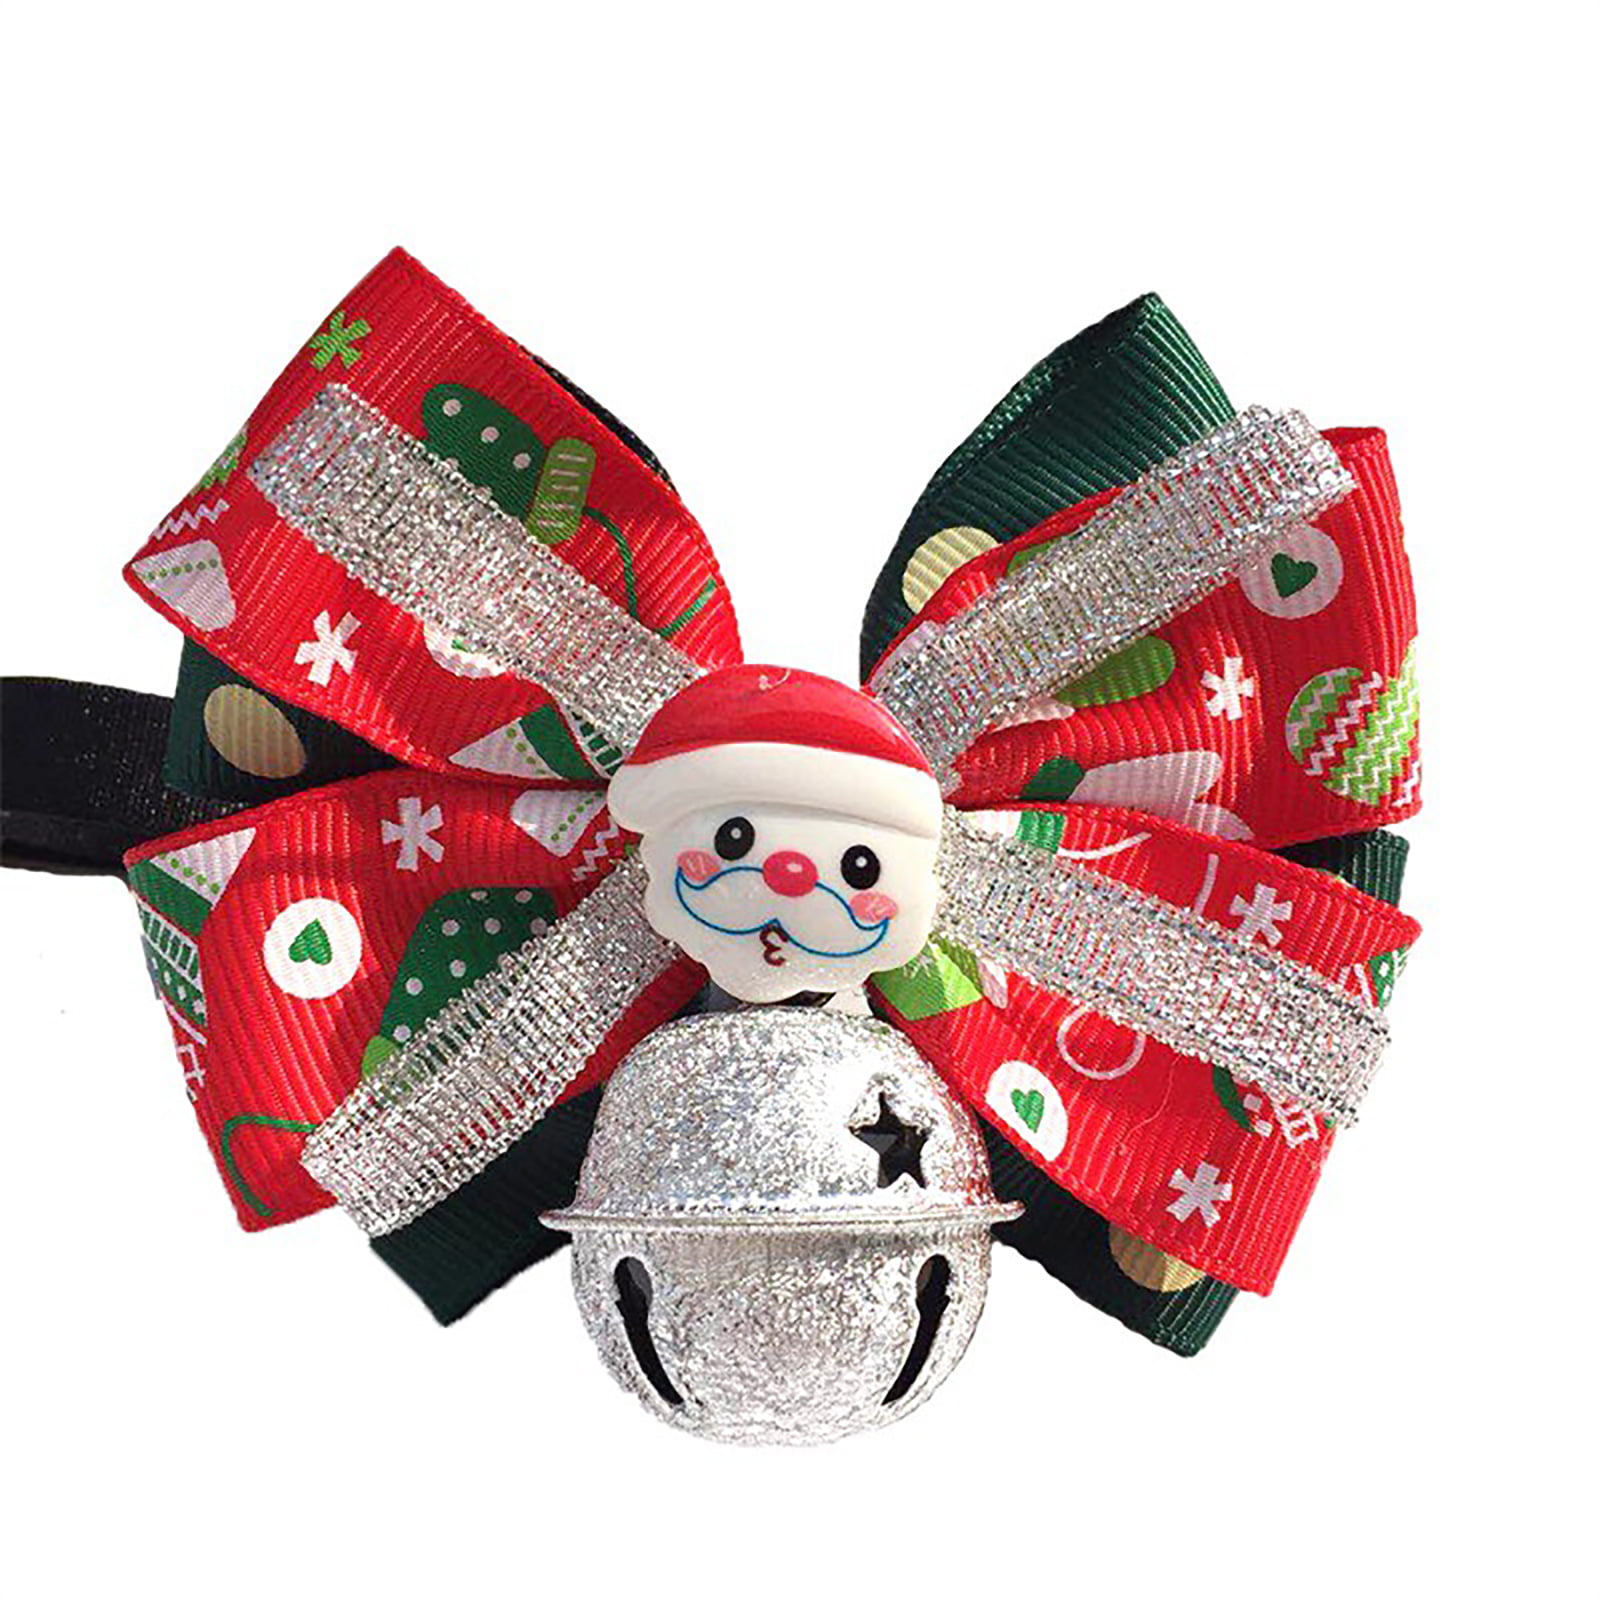 Christmas dog bowtie pet accessories Tiny Snowman bow tie dog accessories Xmas bOwtie dog collar bow ties pet bow tie